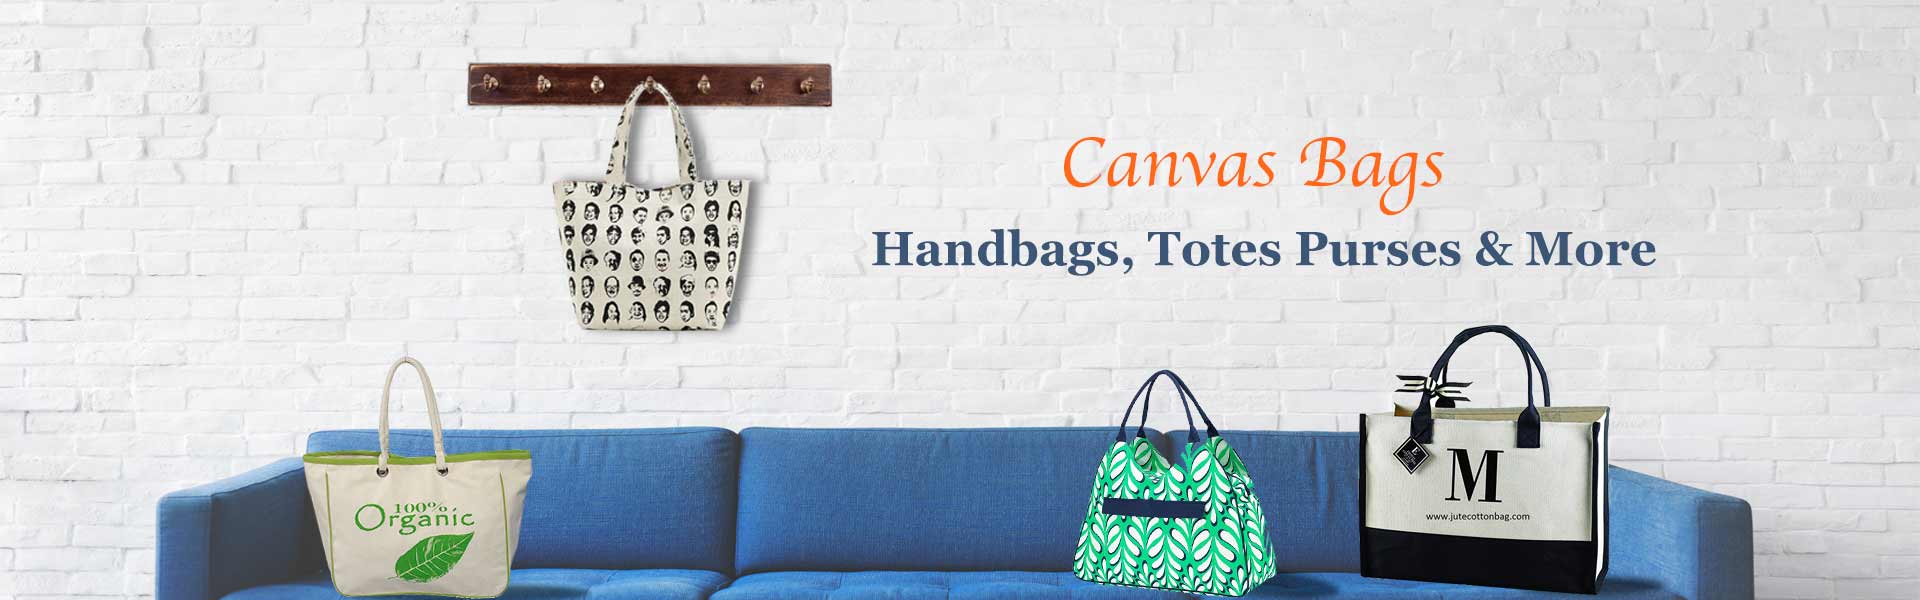 Wholesale Canvas Bags Supplier in Switzerland